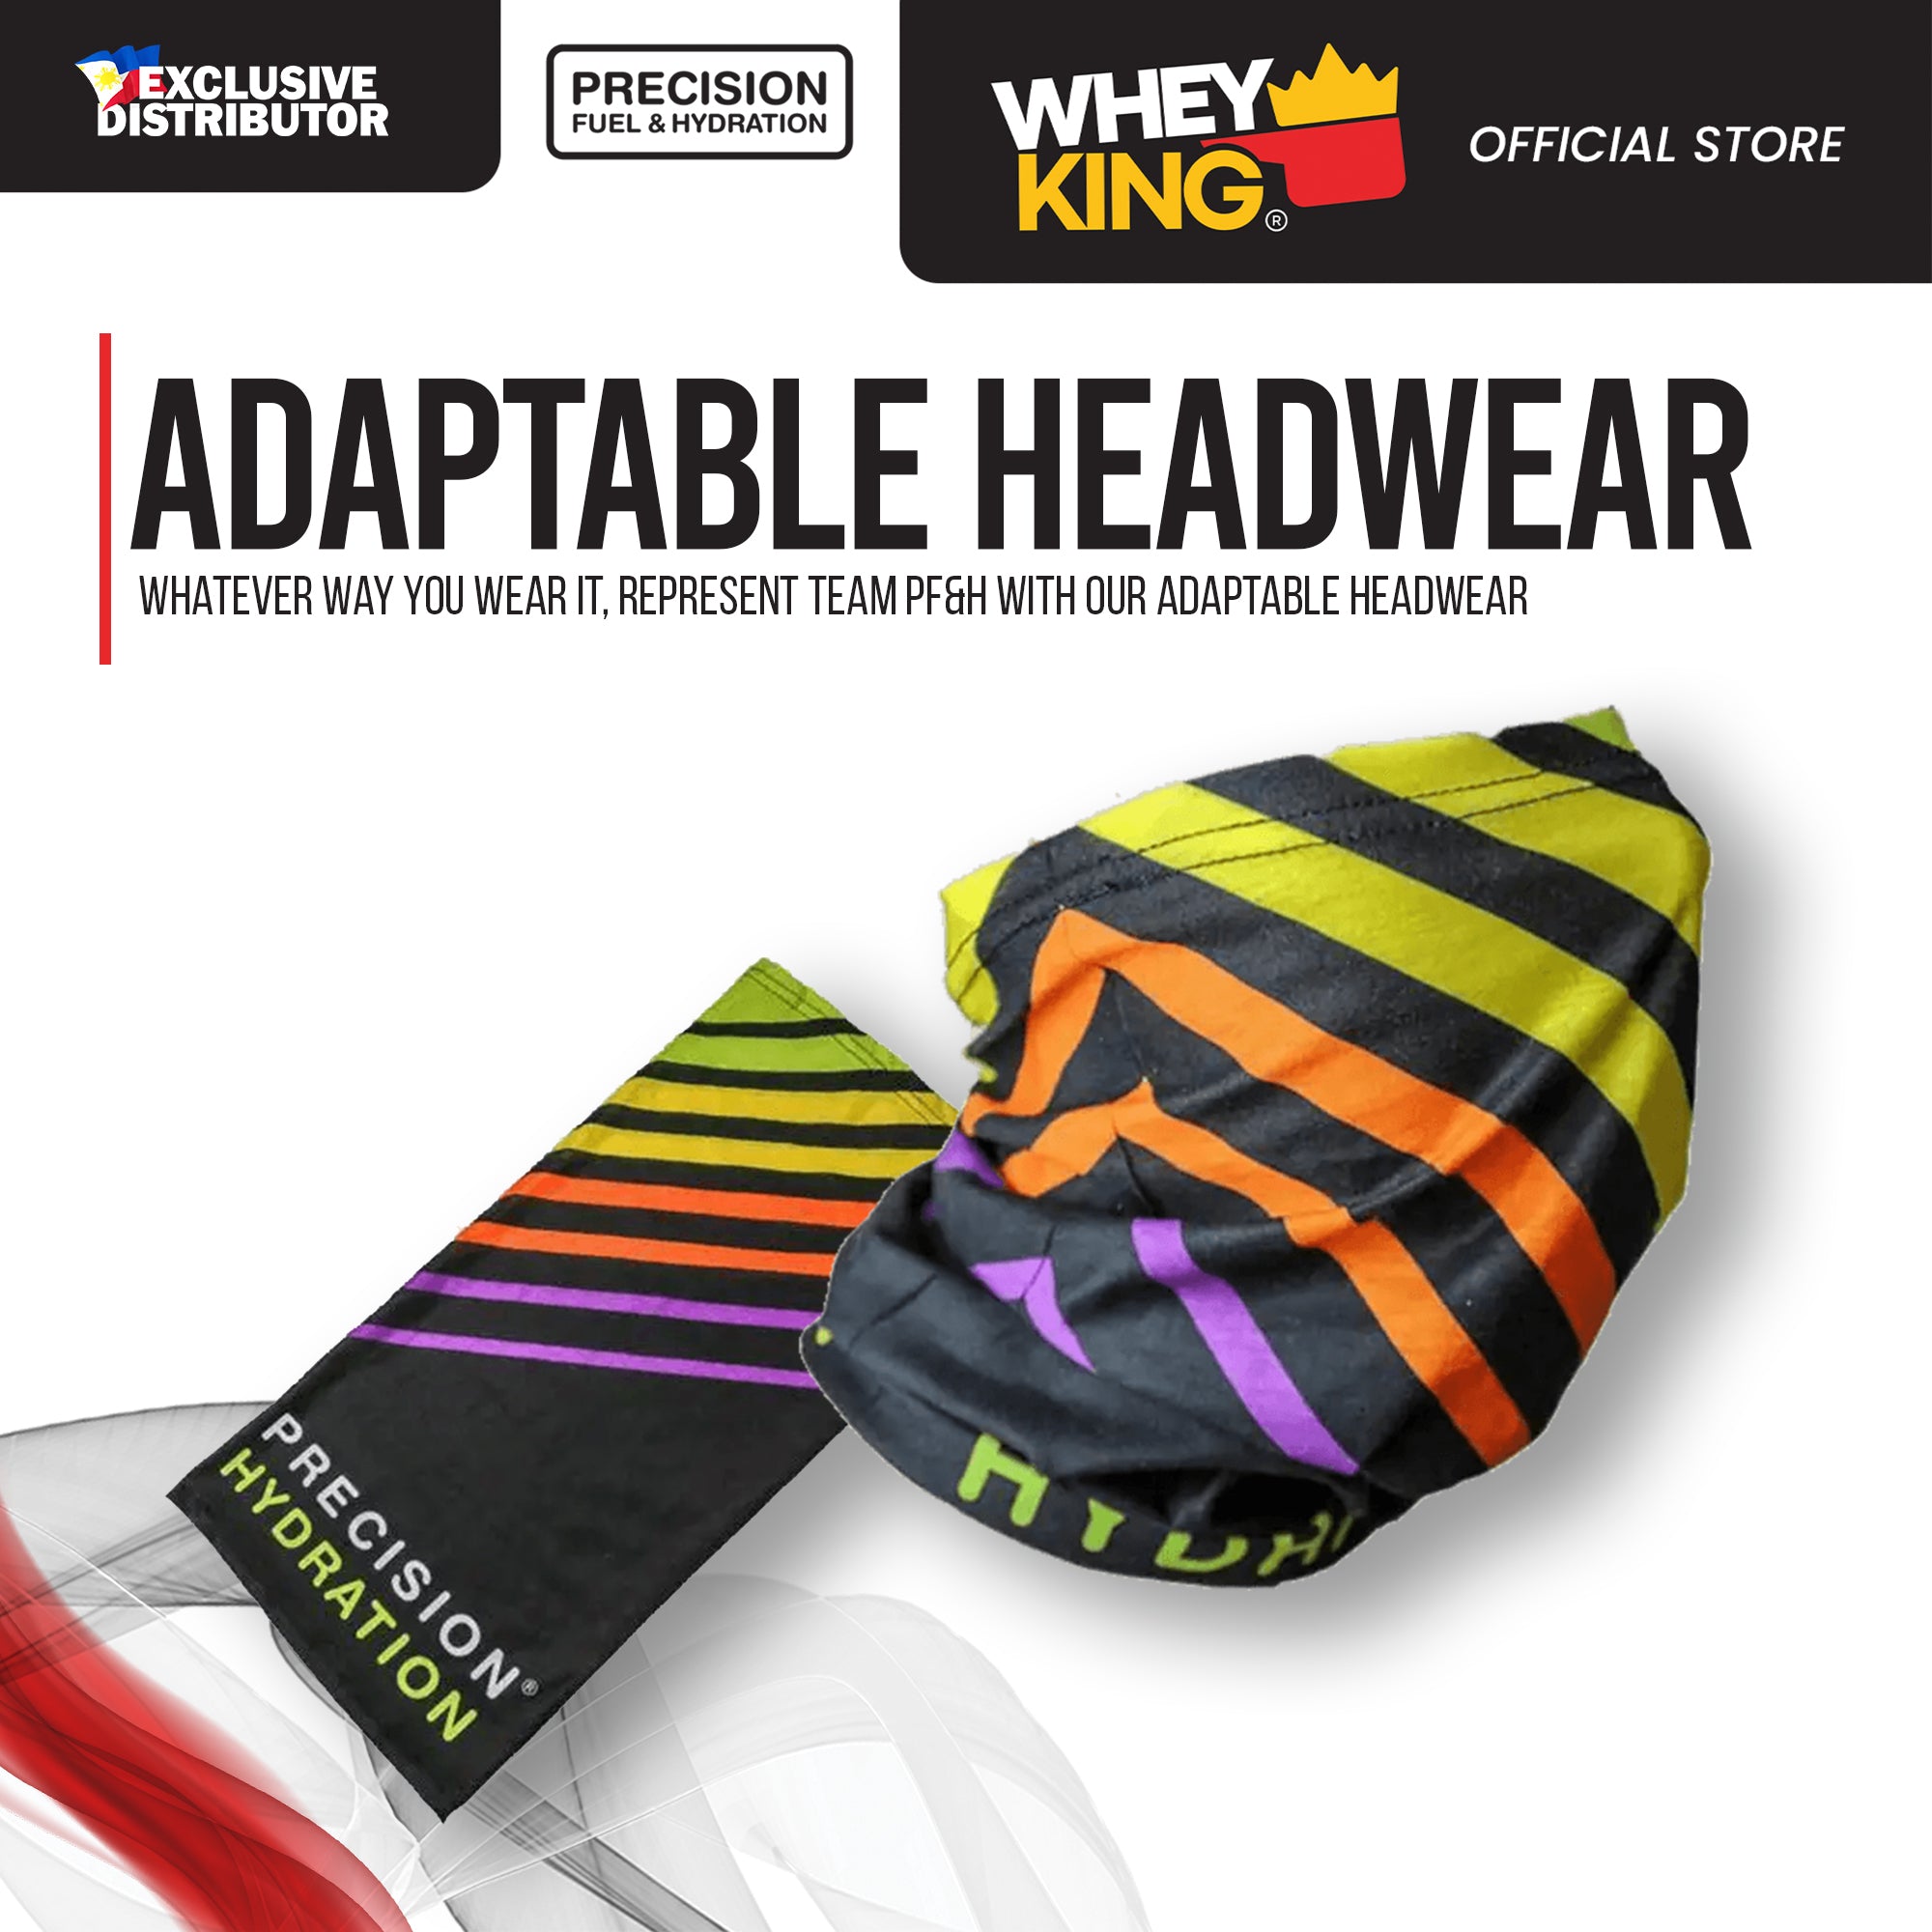 Precision Fuel & Hydration PF Adaptable Headwear